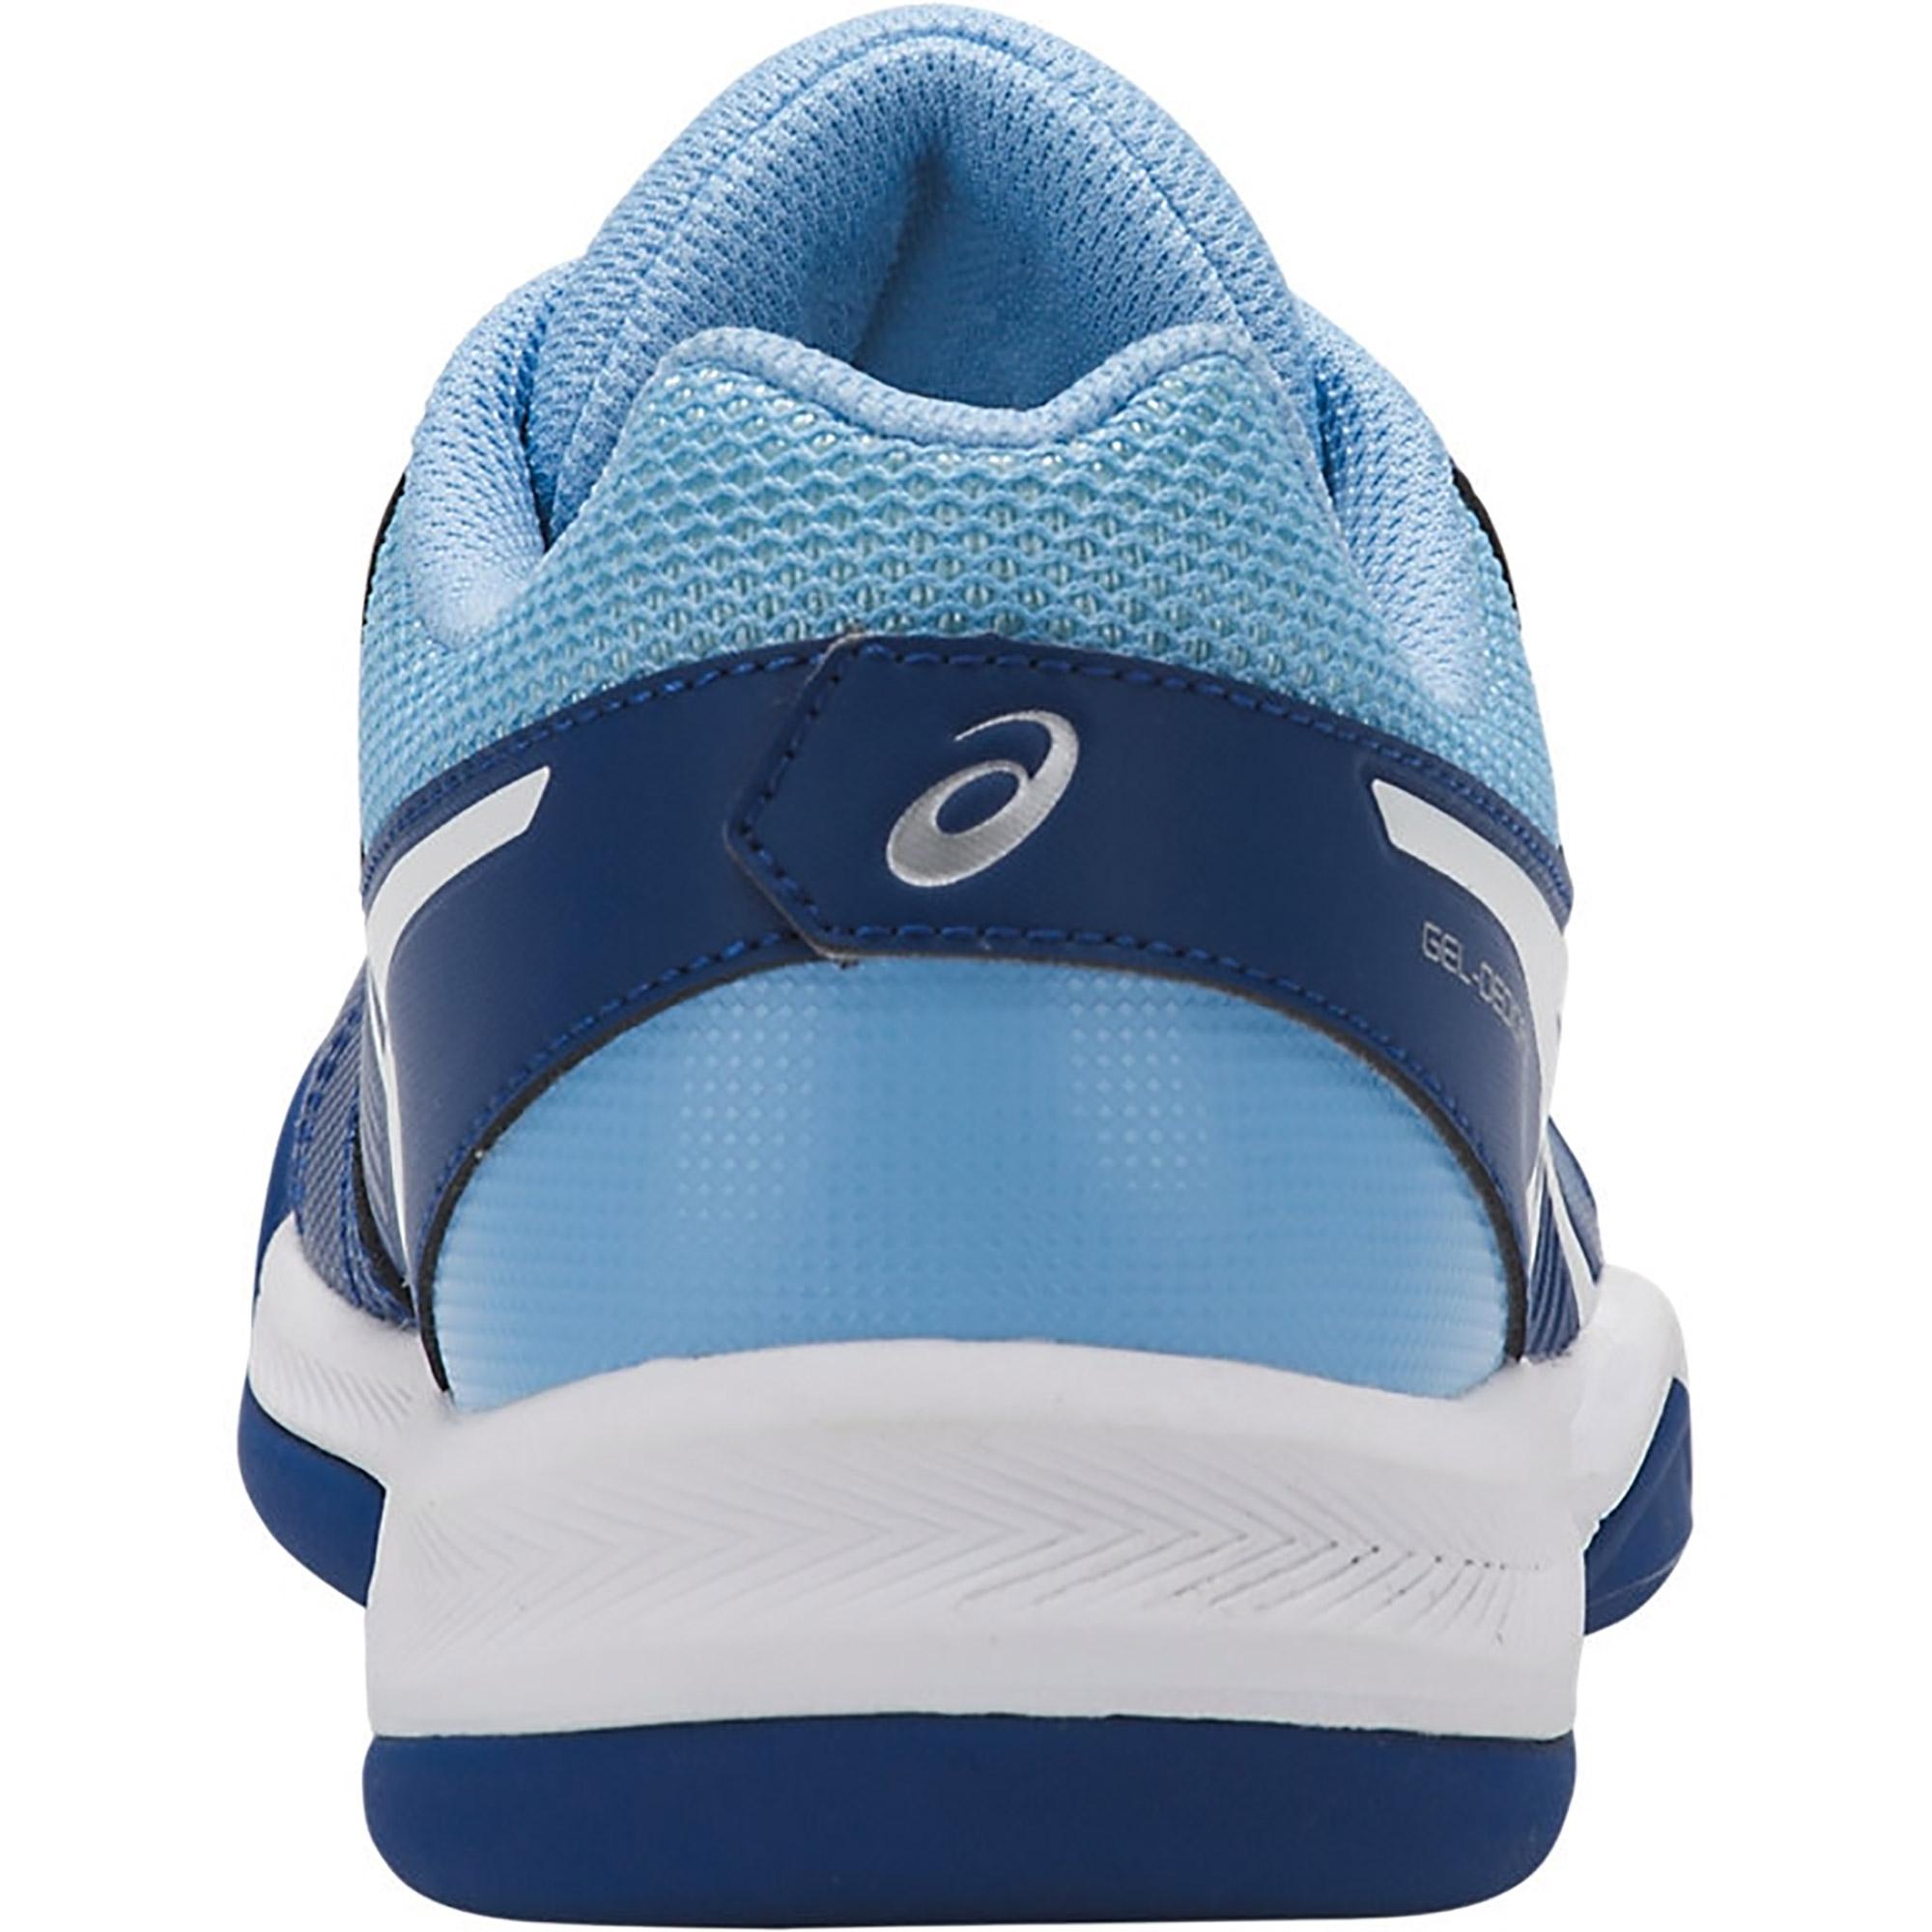 Asics Womens GEL-Dedicate 5 Carpet Tennis Shoes - Monaco Blue/White ...